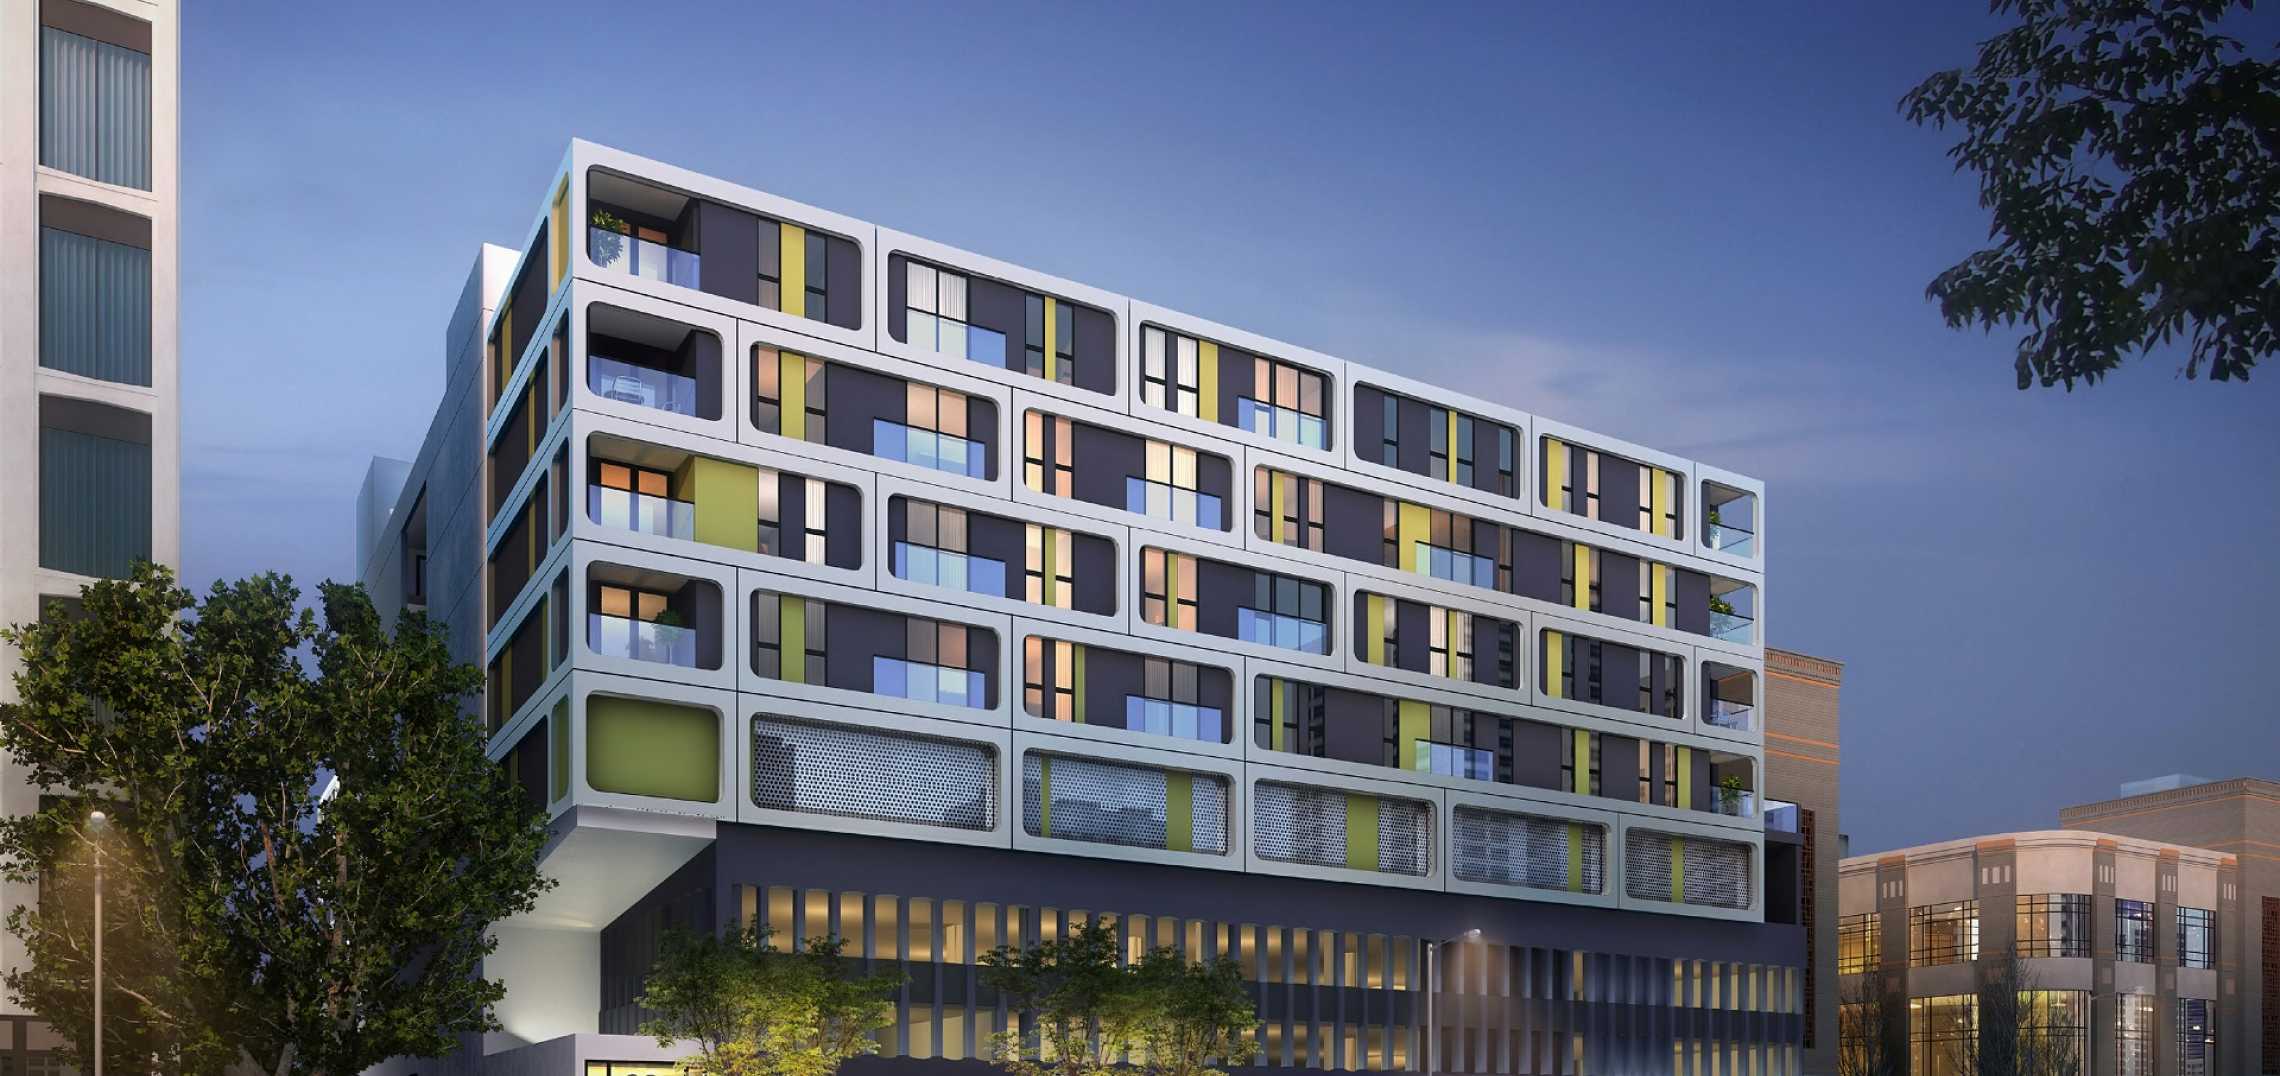 Apartments to Rise Atop Koreatown Parking Structure | Urbanize LA